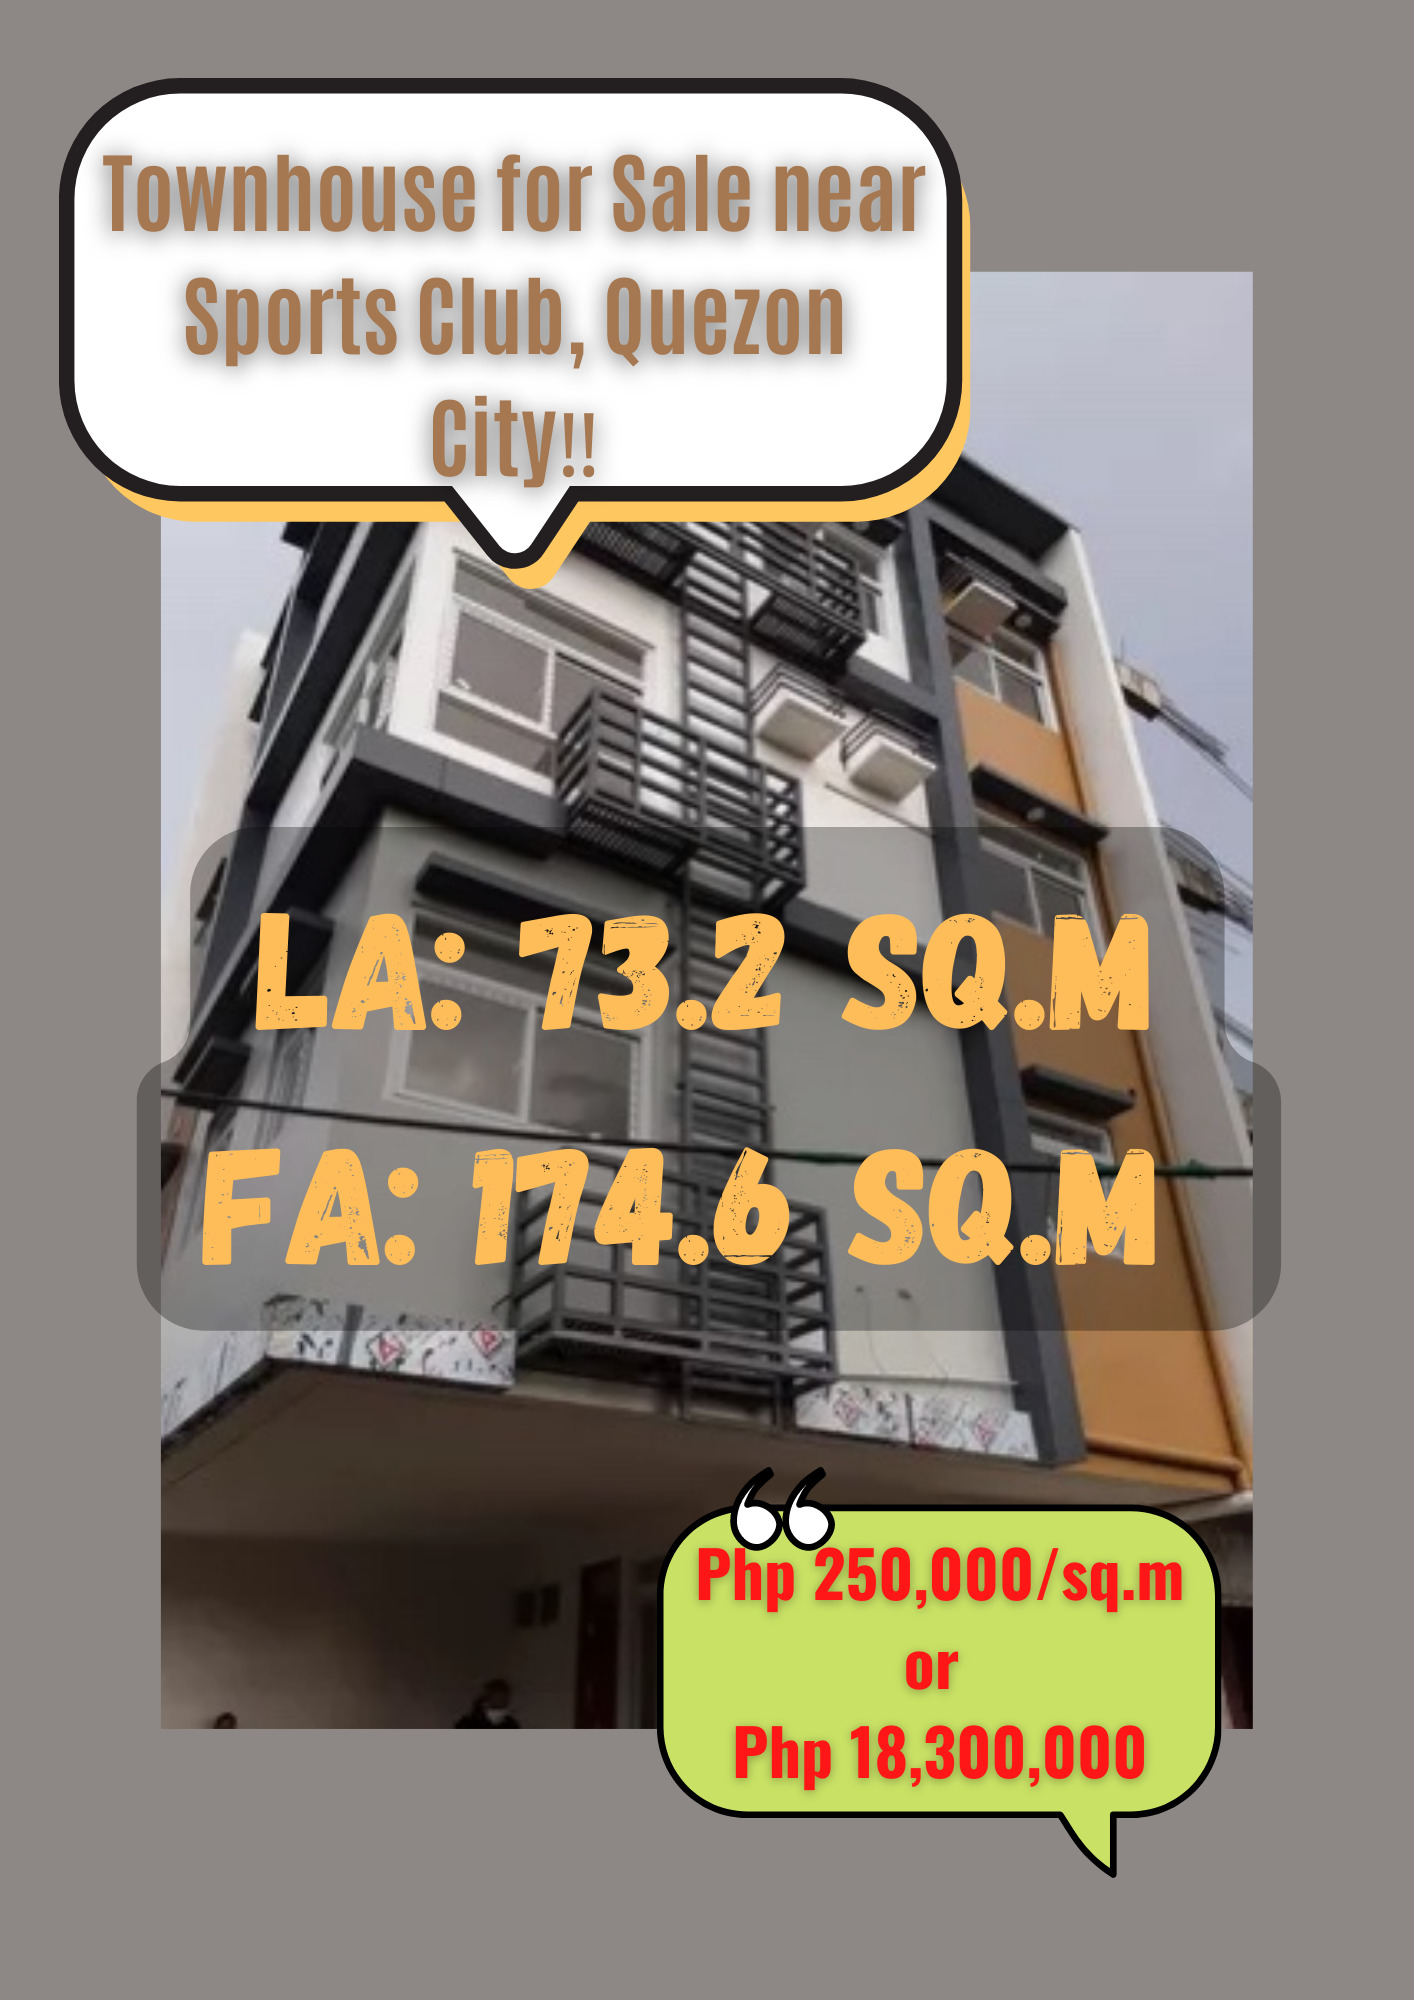 Townhouse for Sale near Sports Club, Quezon City‼️